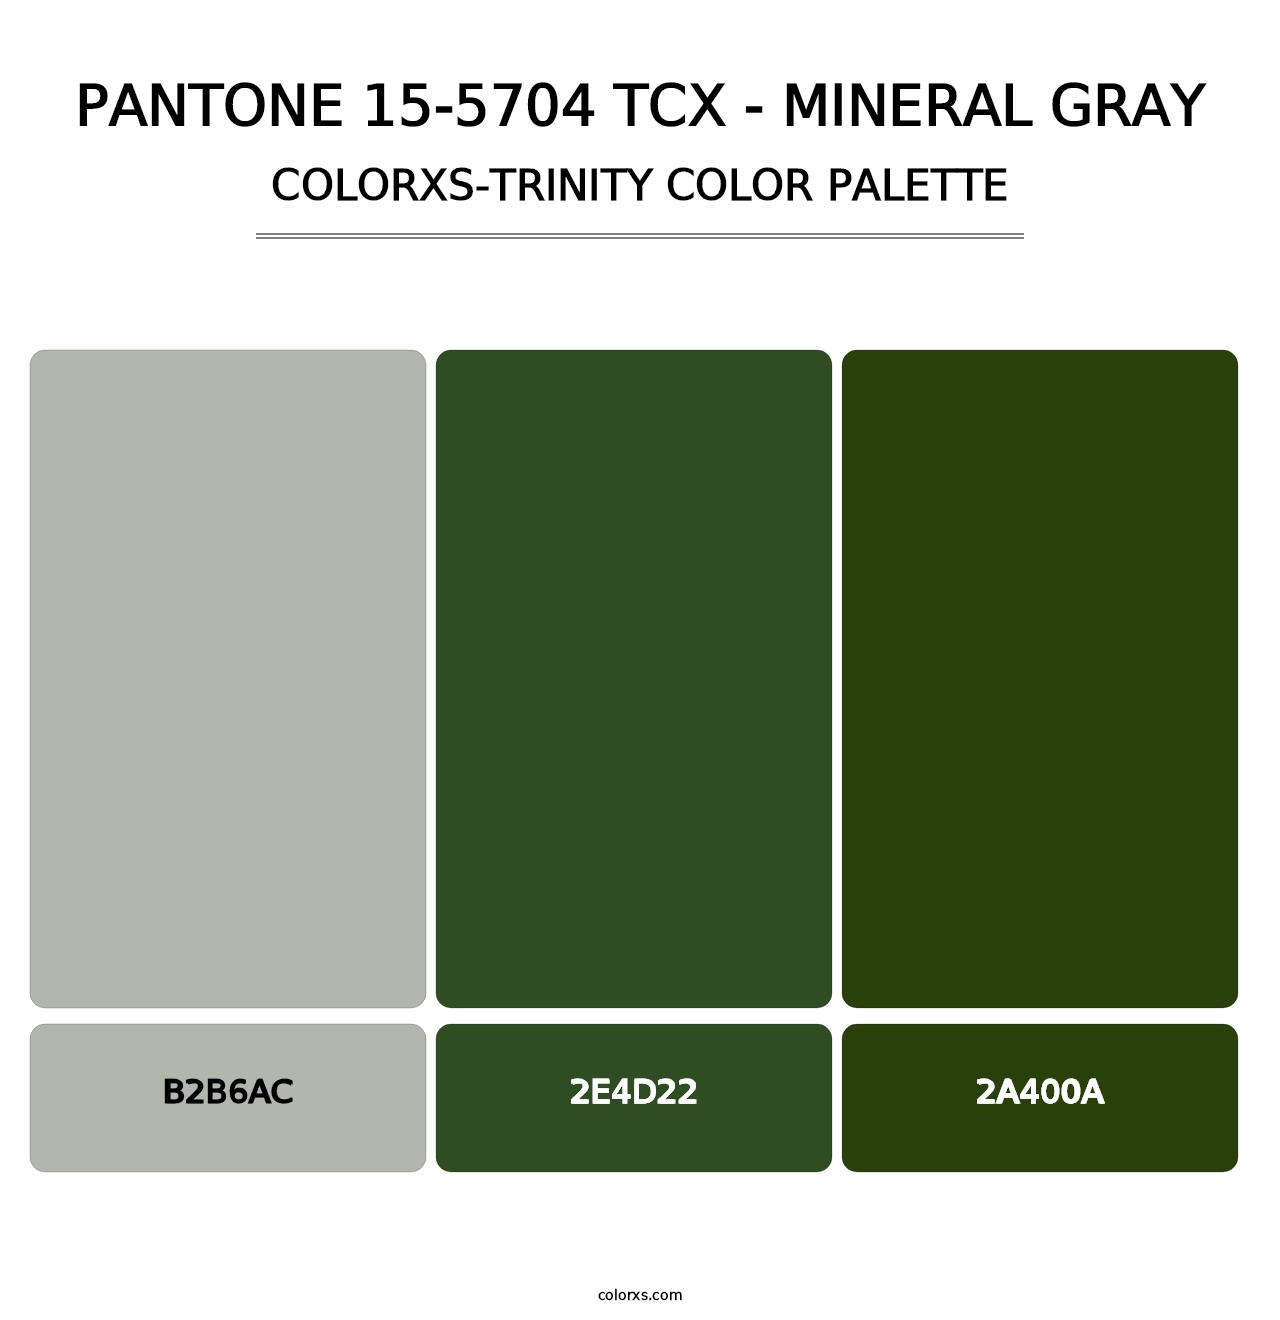 PANTONE 15-5704 TCX - Mineral Gray - Colorxs Trinity Palette